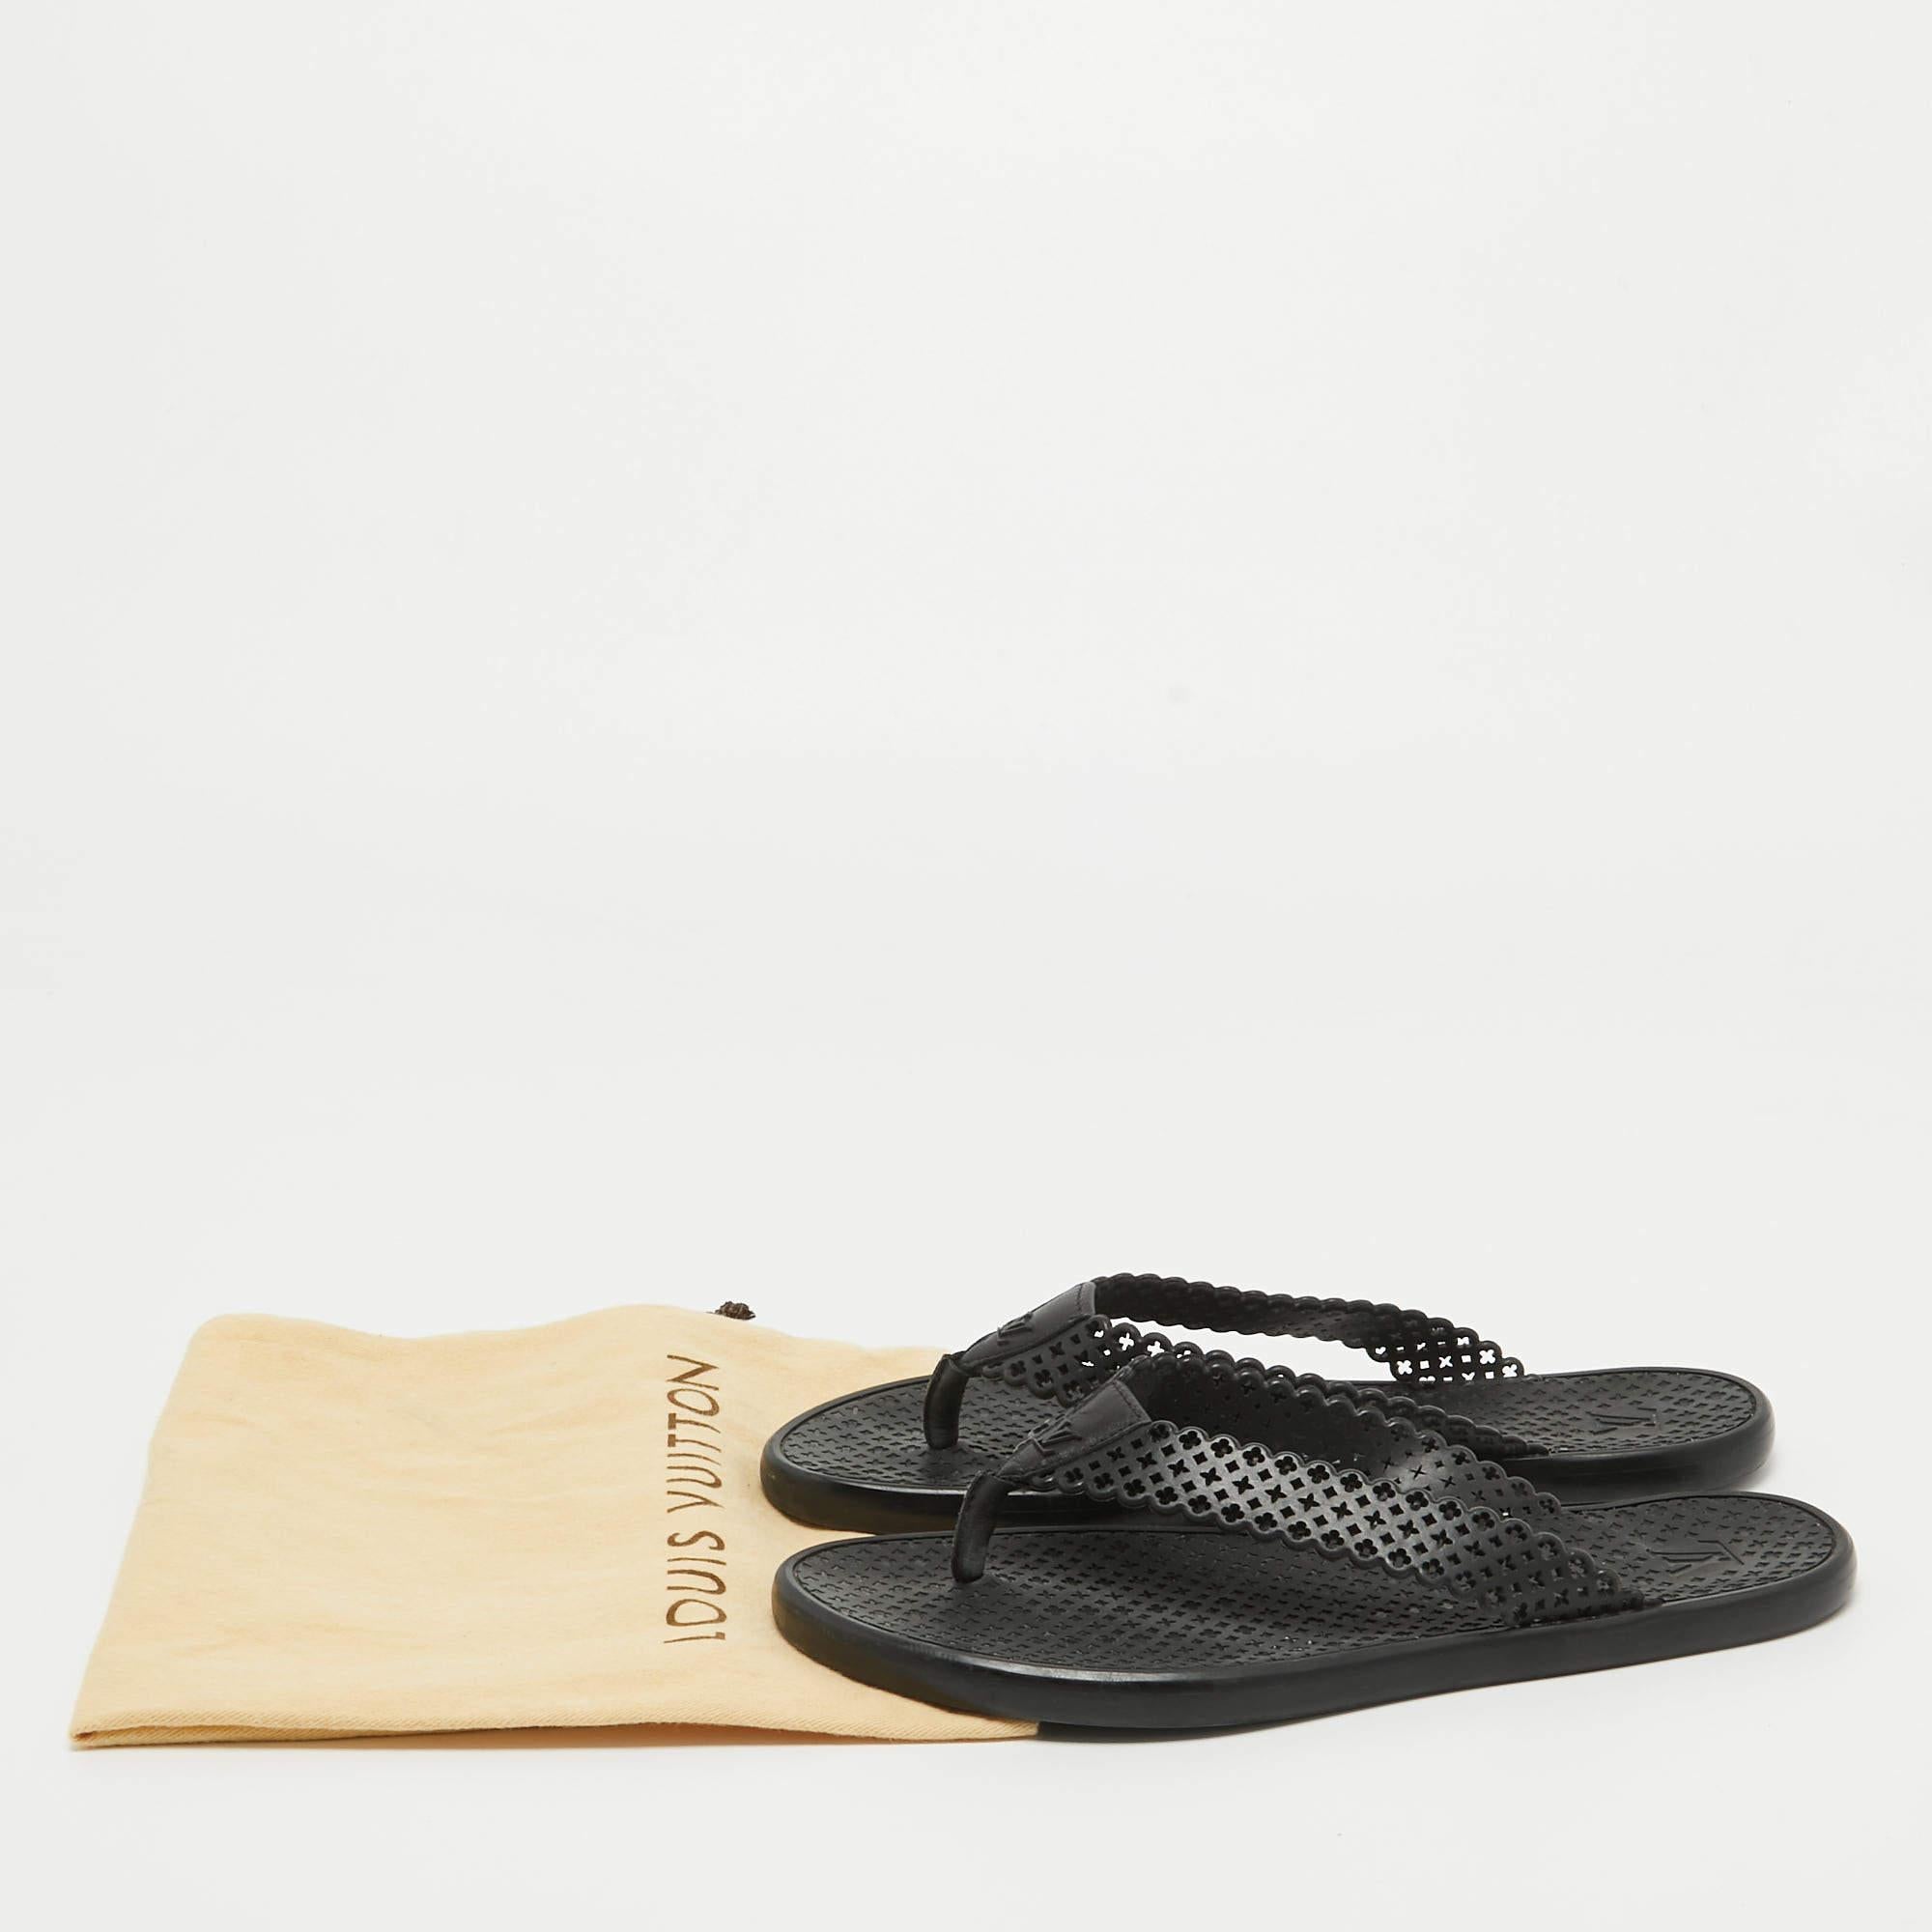 Louis Vuitton Black Leather Thong Flat Sandals Size 39.5 5